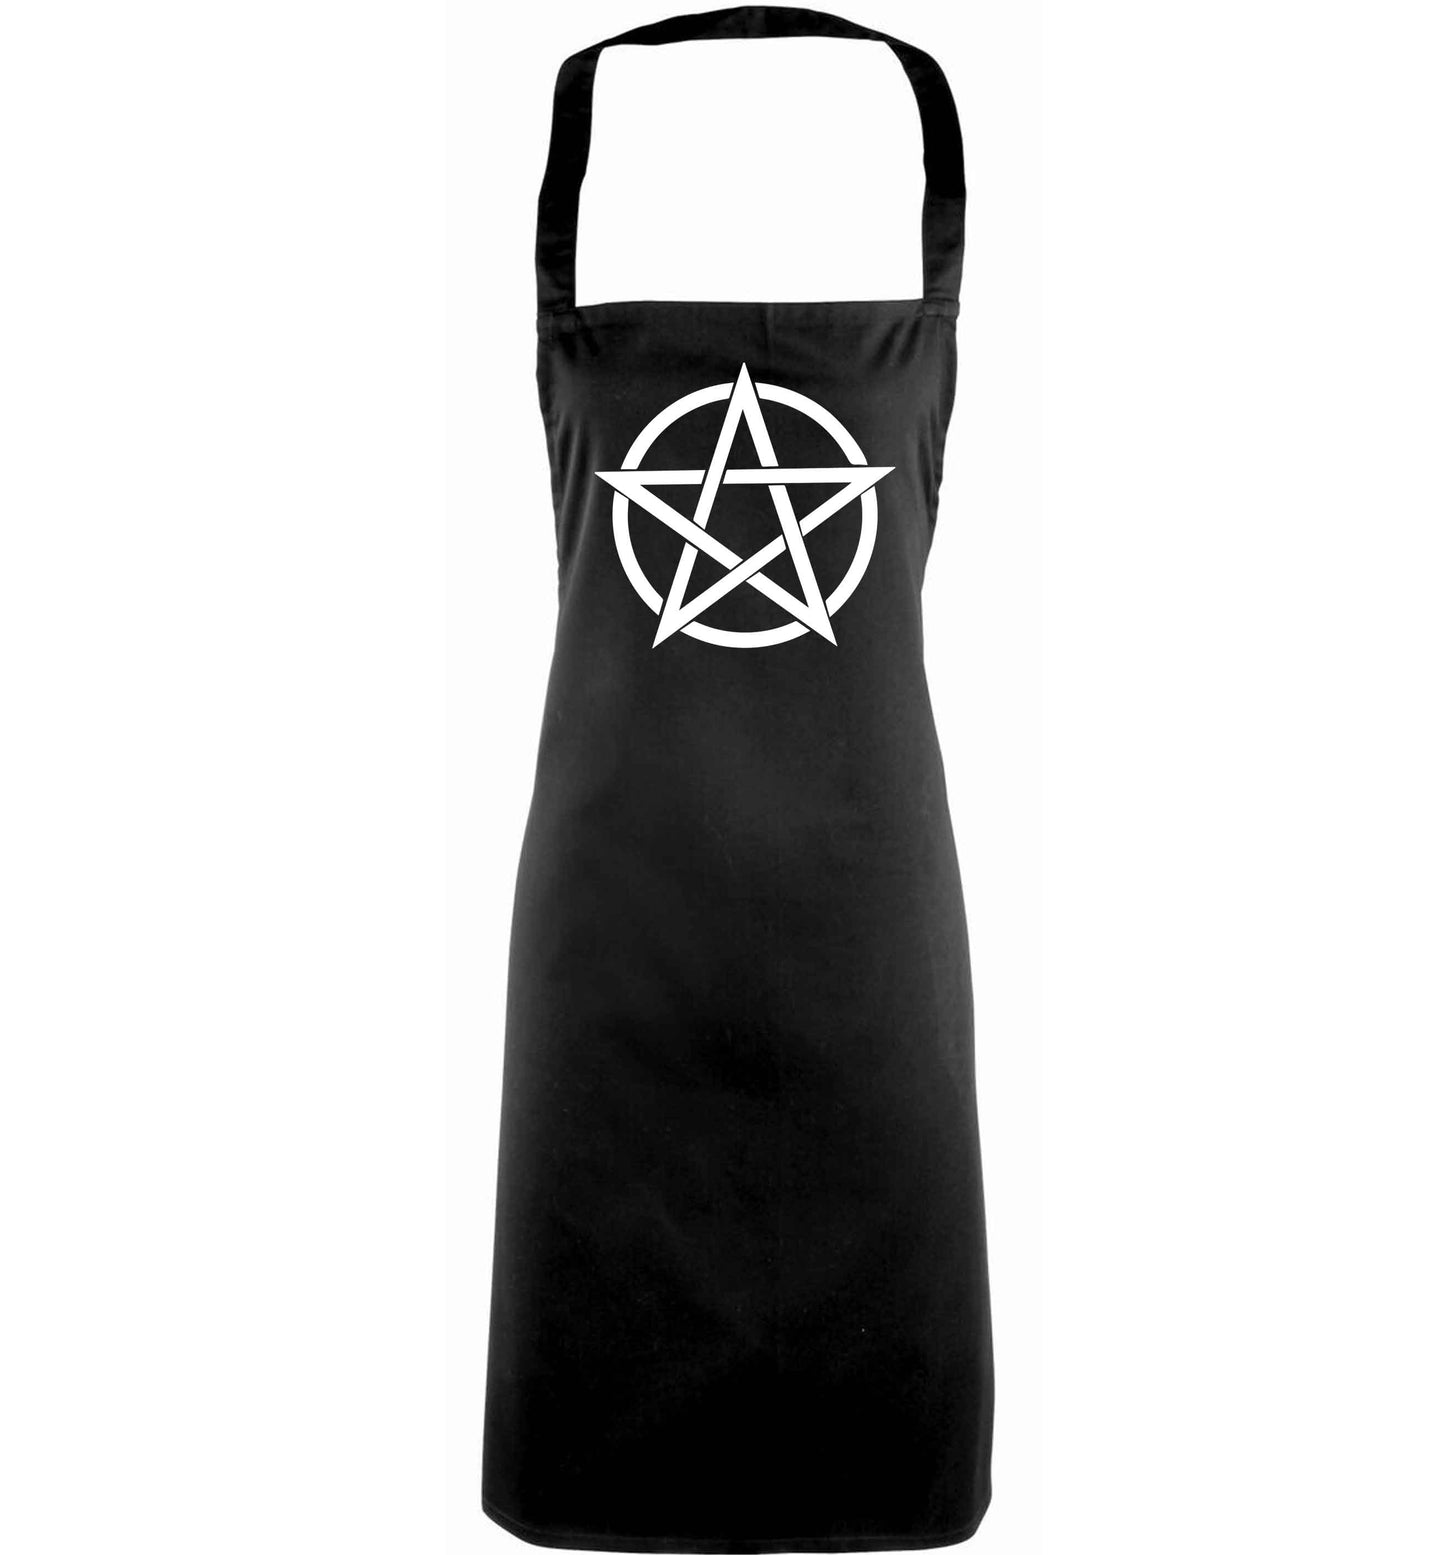 Pentagram symbol adults black apron